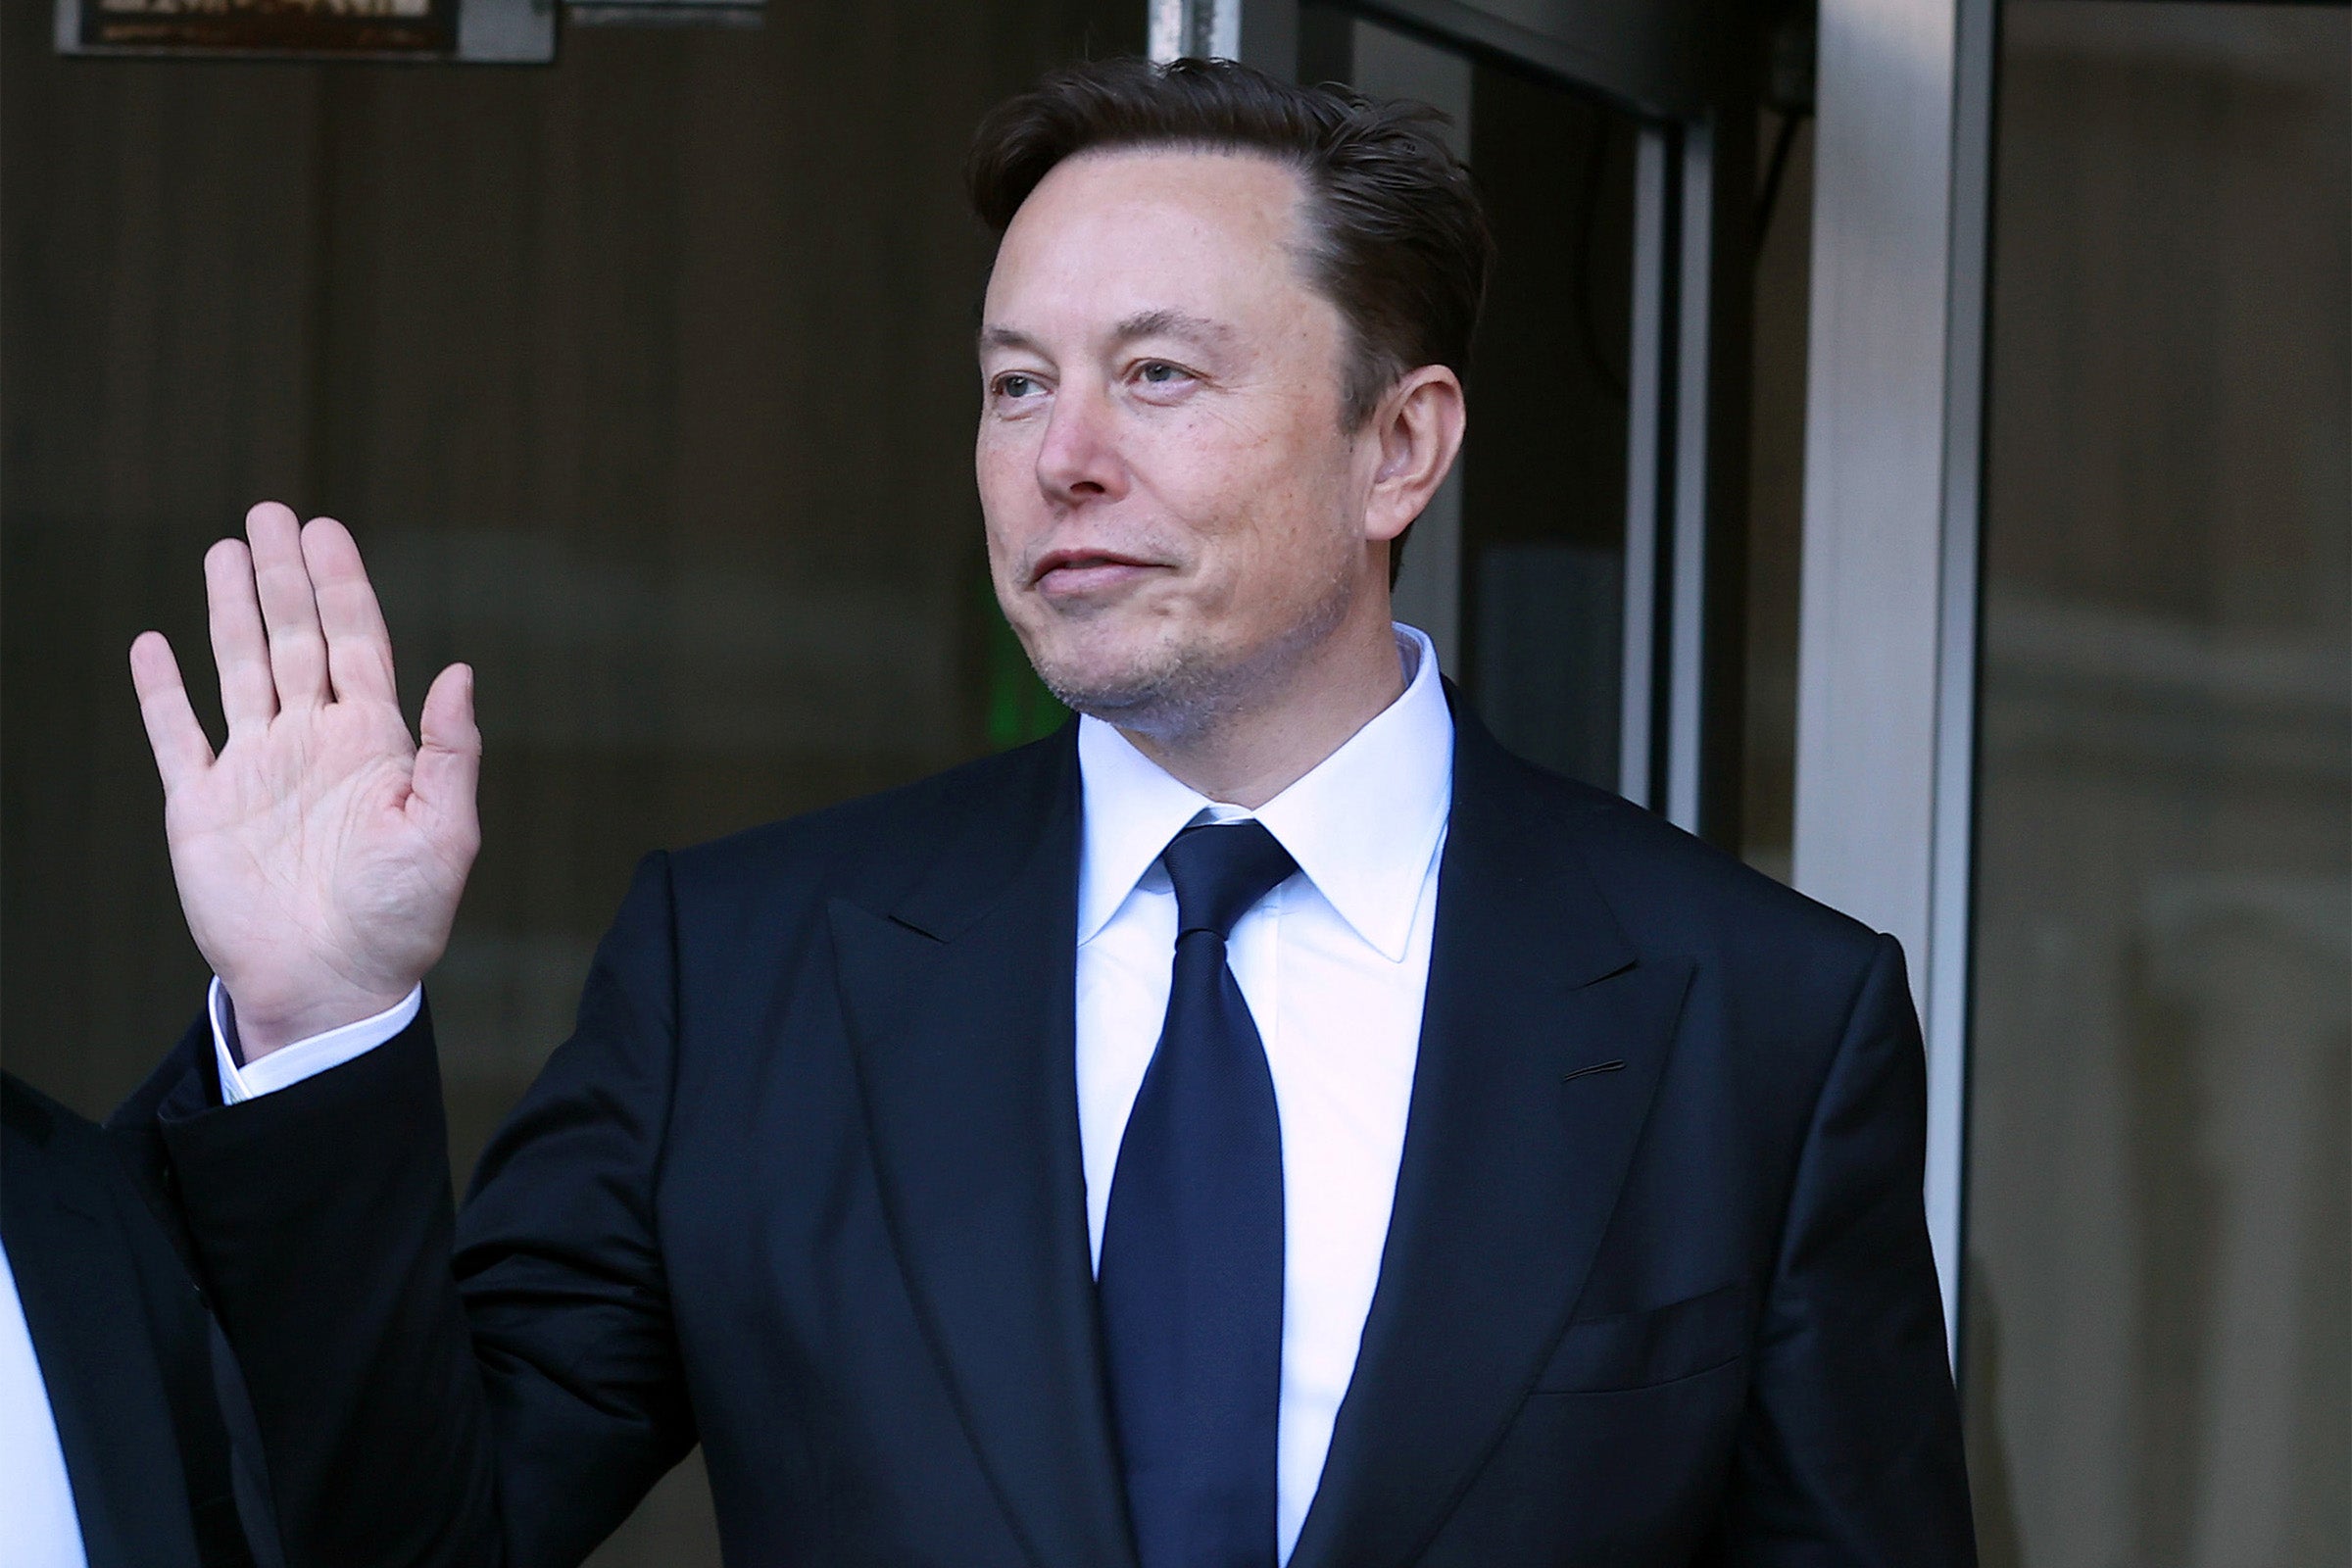 Entrepreneur of the Year, 2007: Elon Musk